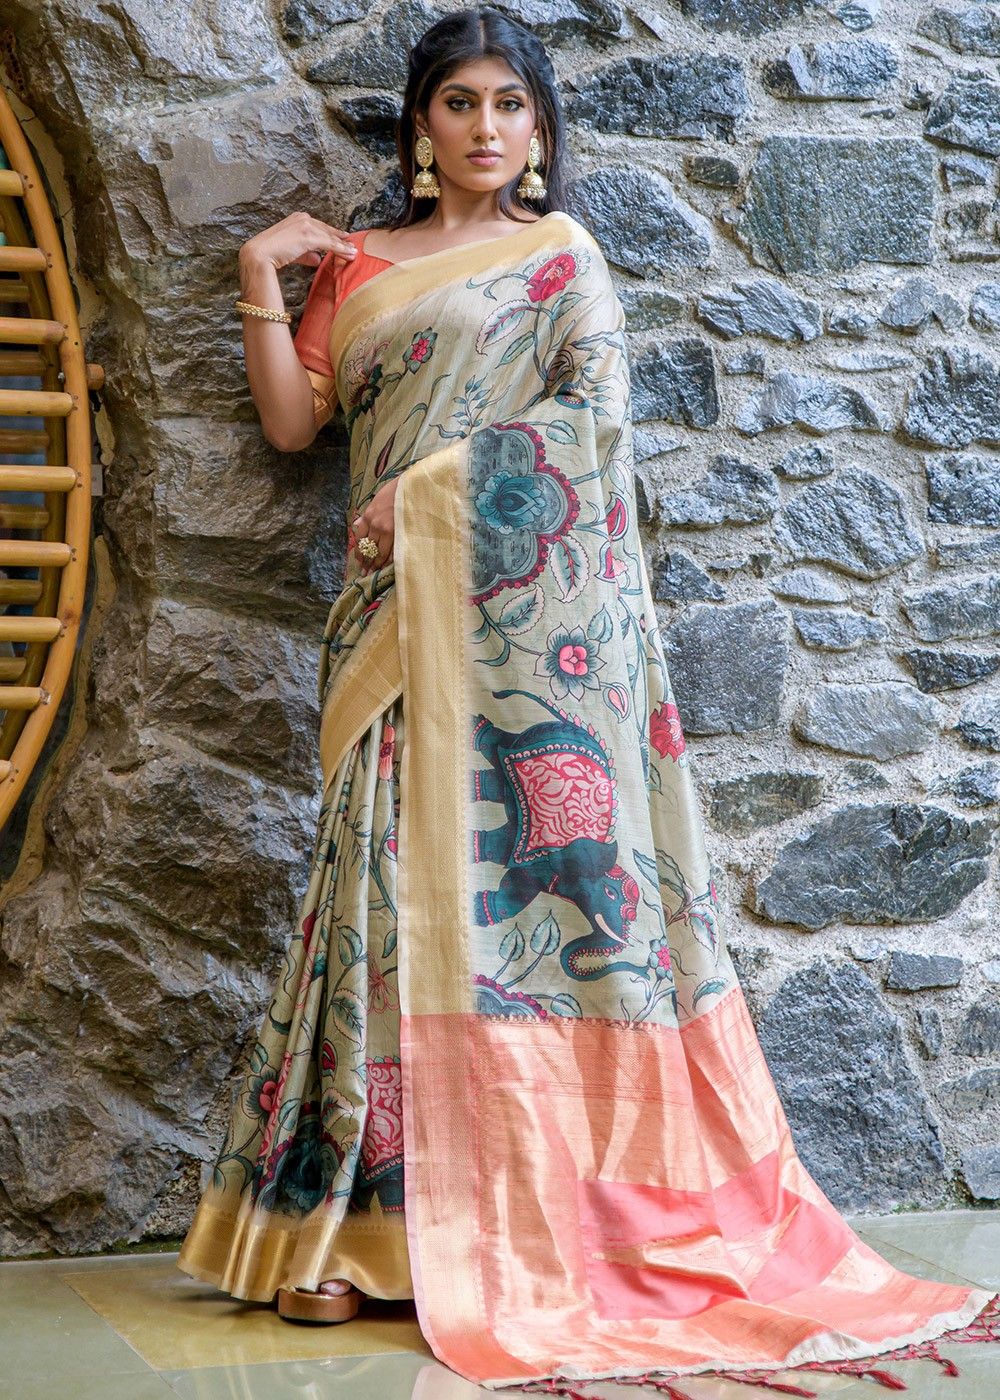 Ushna Shah grace in a floral Saree: have a look - Pk Showbiz